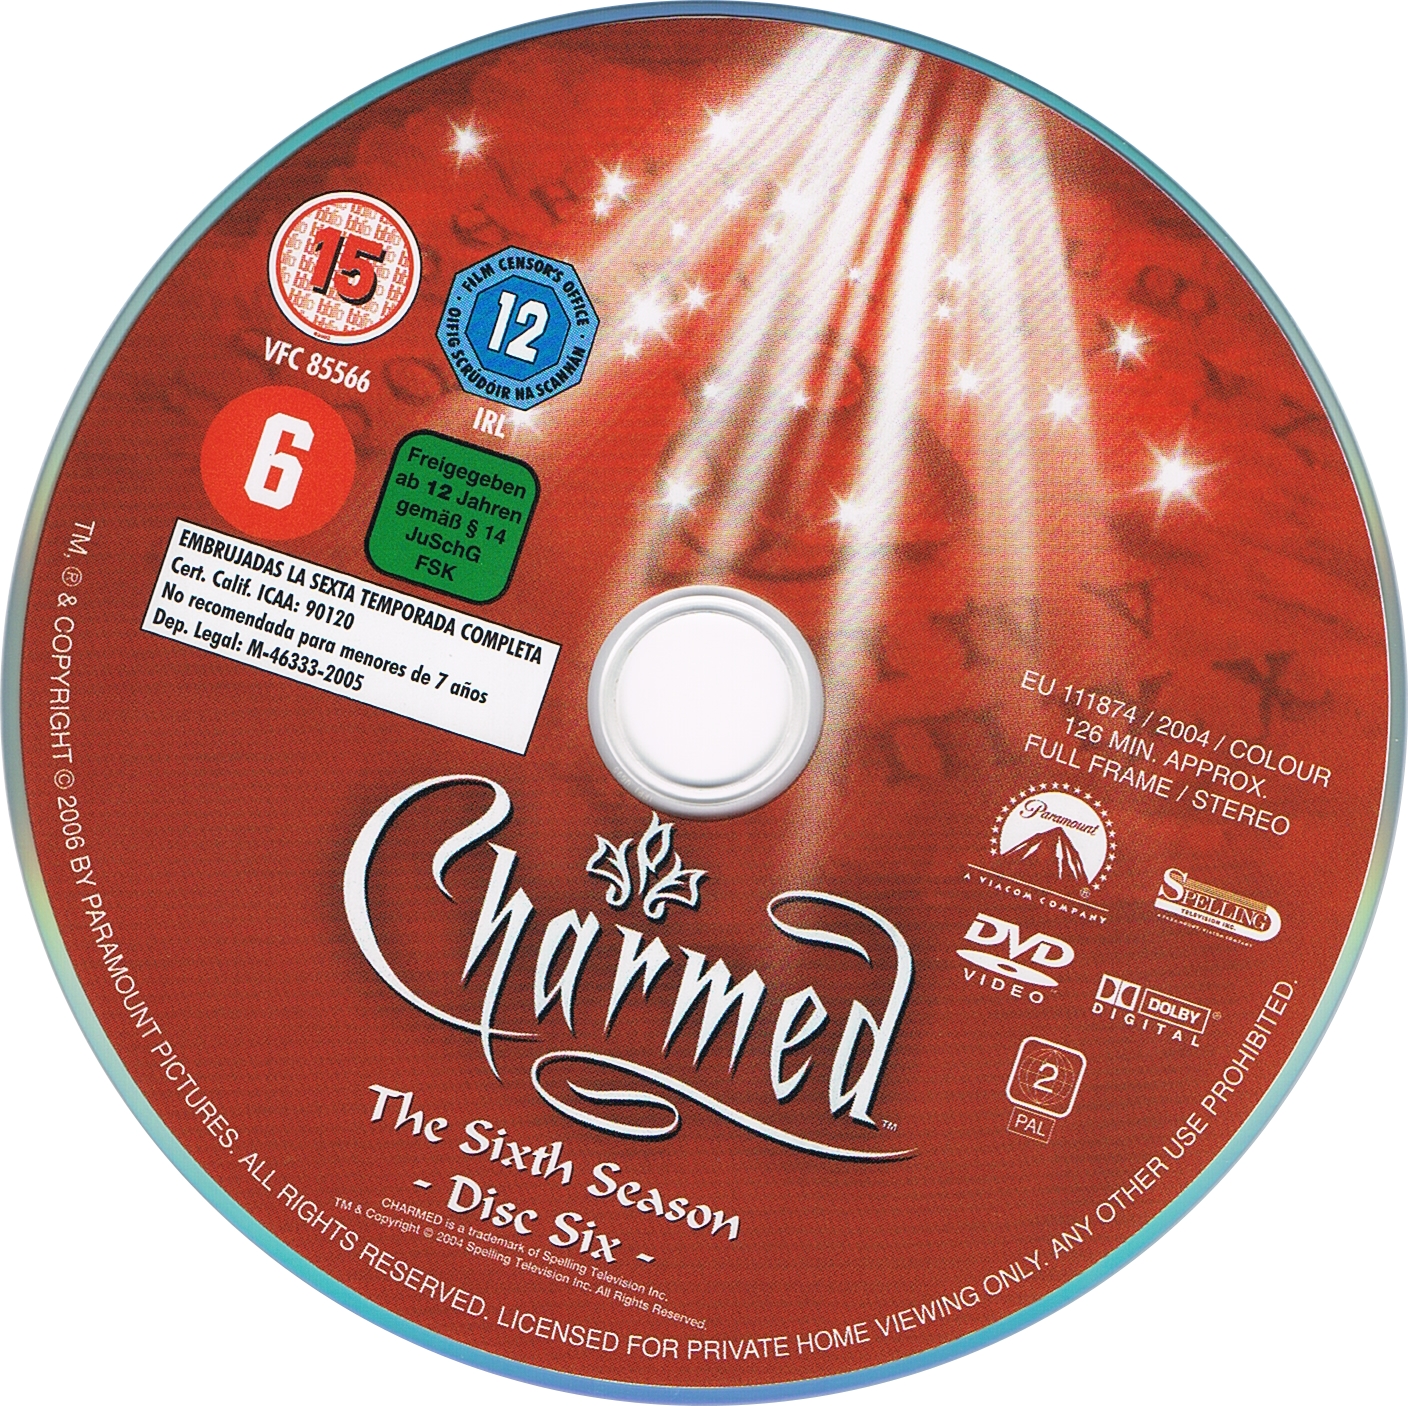 Charmed Saison 6 DISC 6